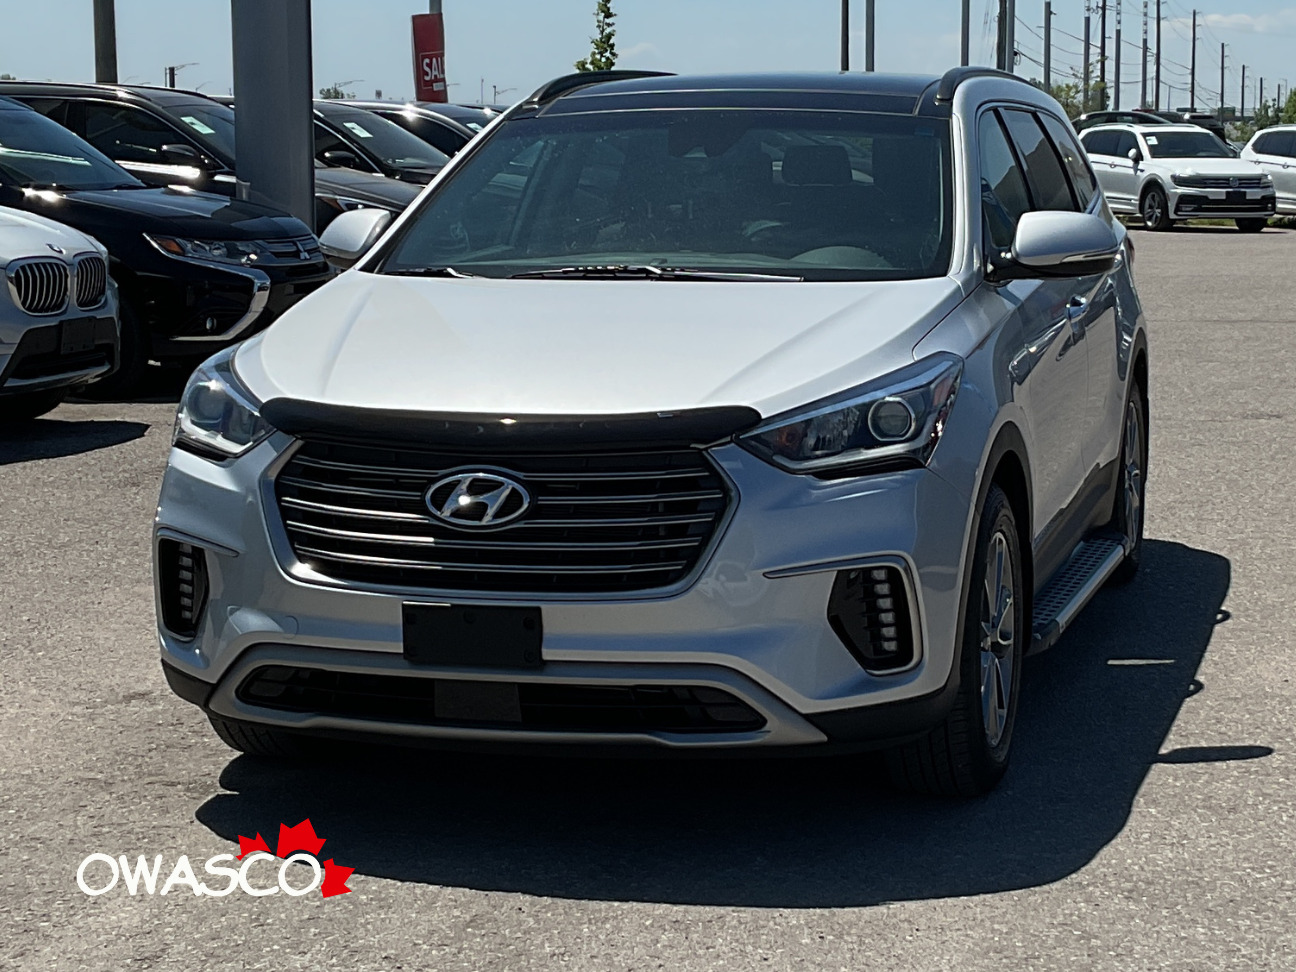 2019 Hyundai Santa Fe XL 3.3L Clean CarFax! Panoramic Sunroof!